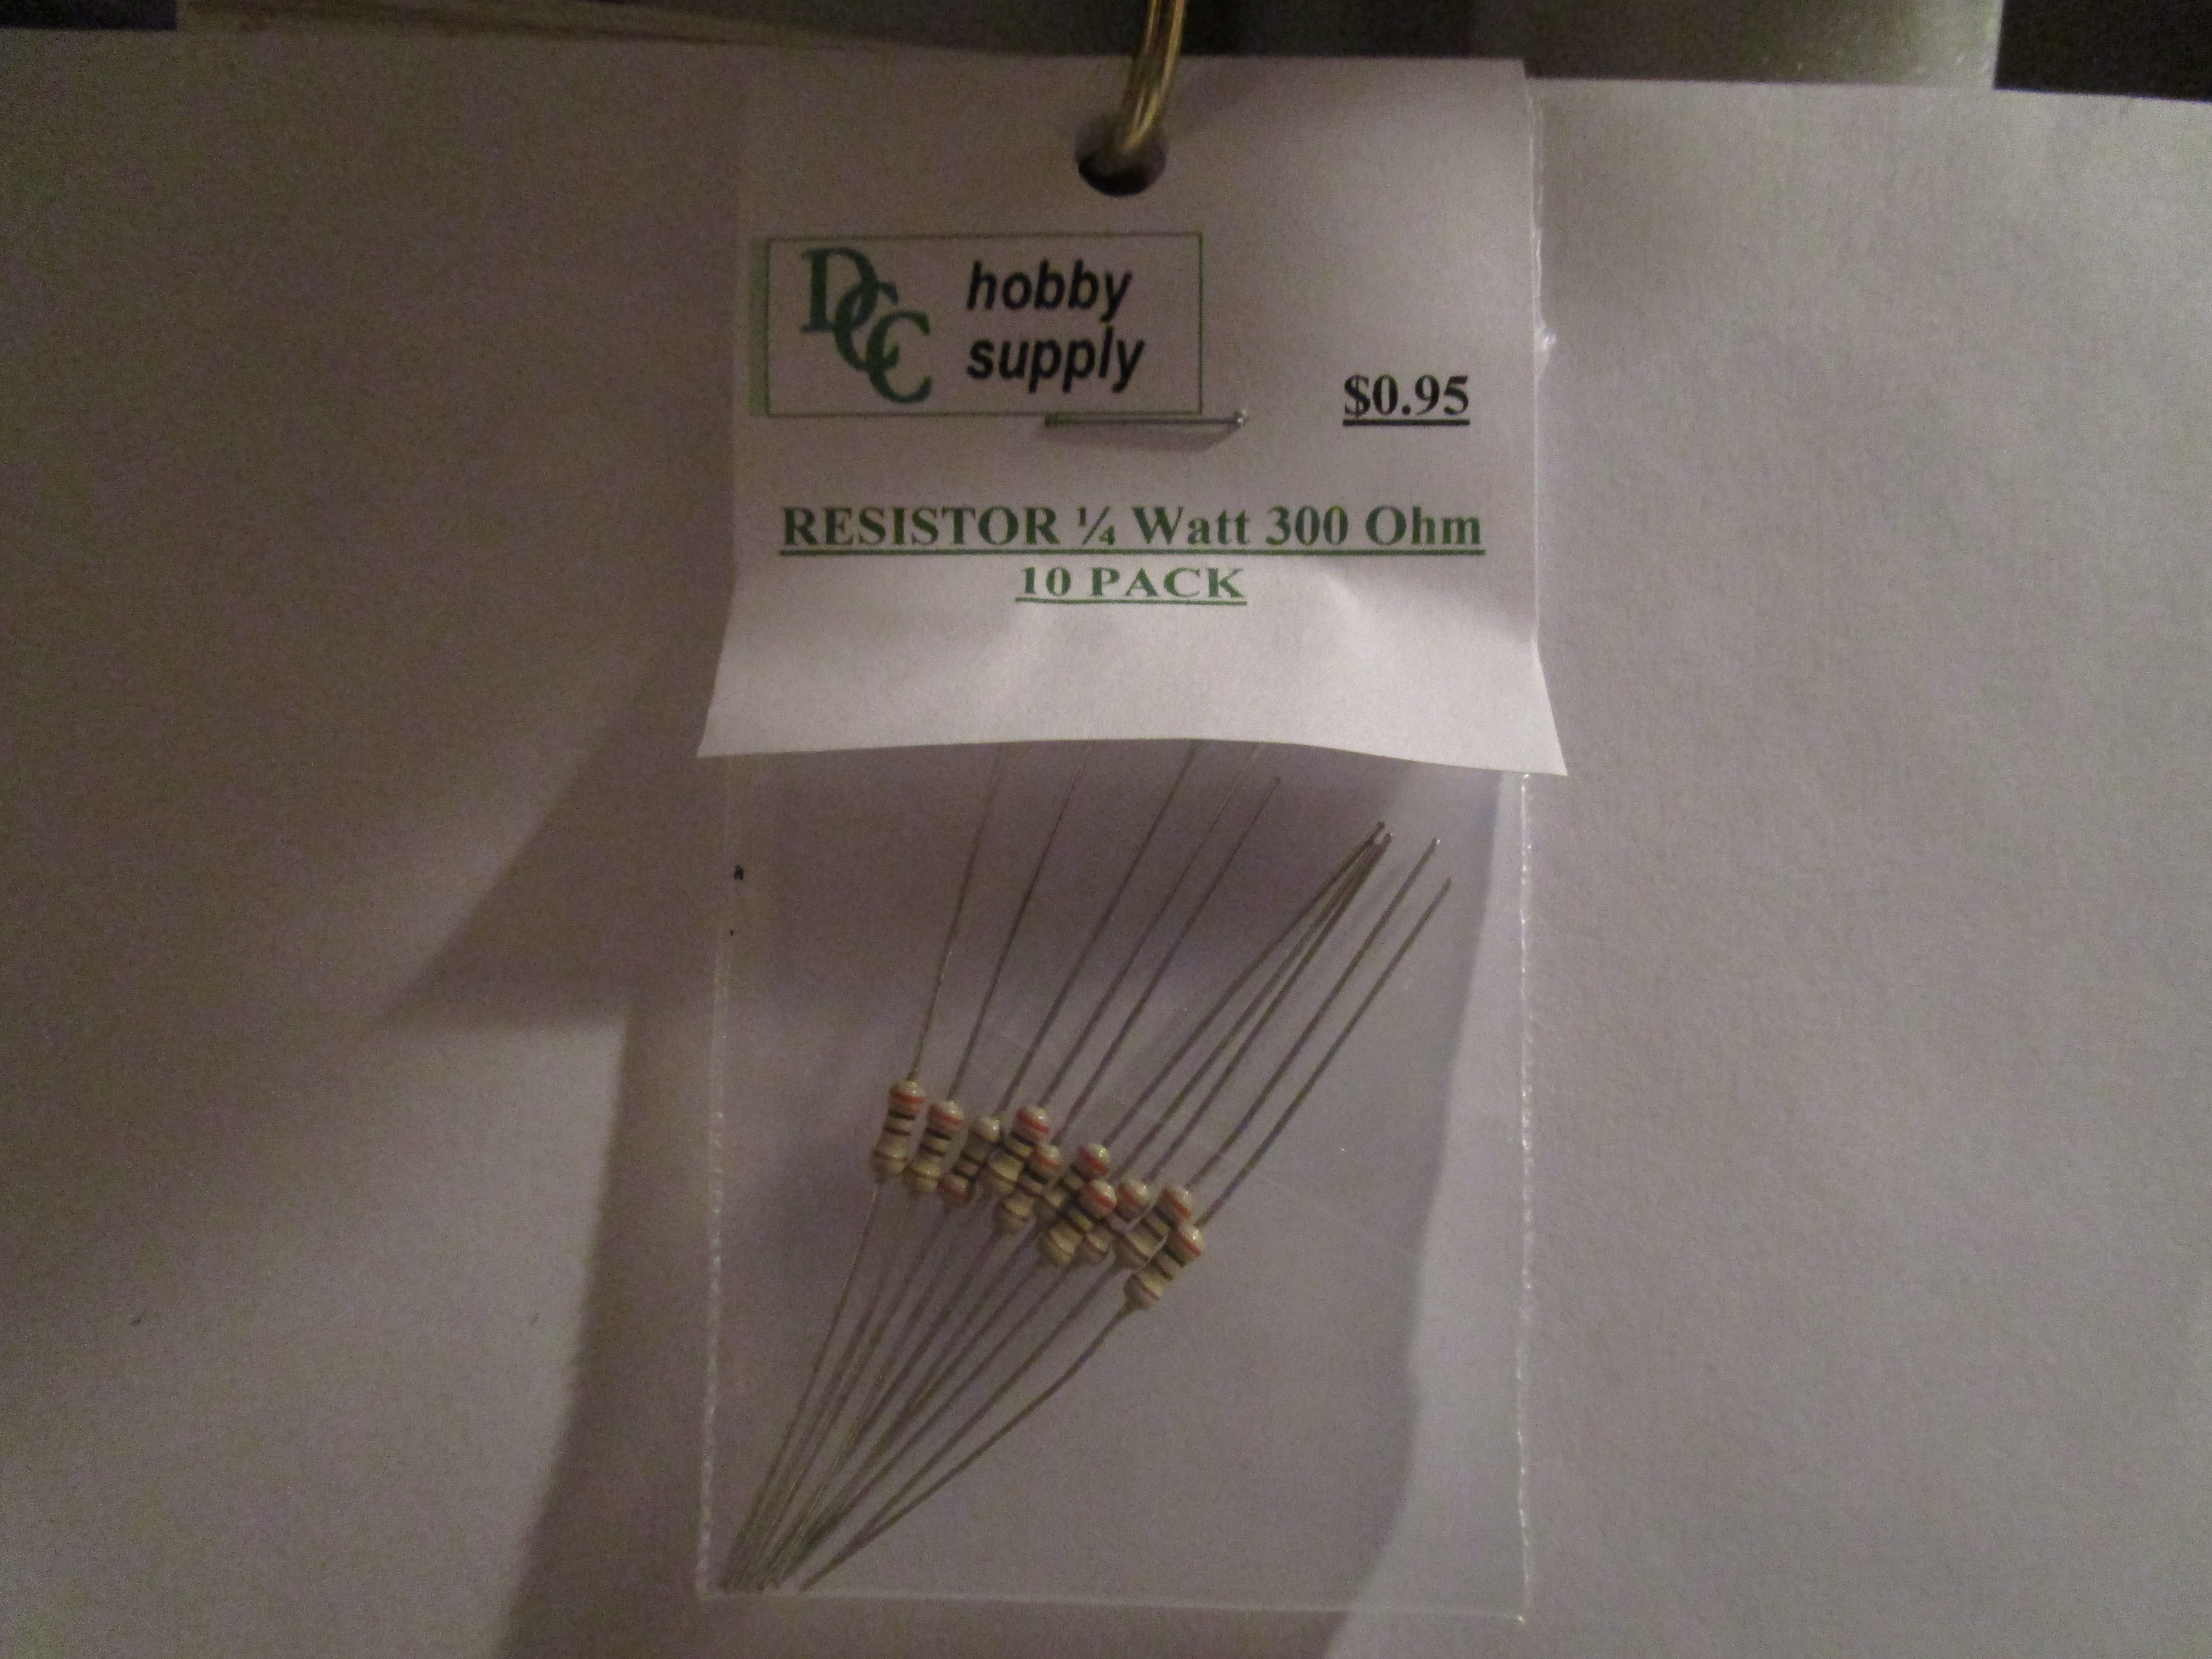 Resistor, 1/4 watt 300 Ohm (10 pack)